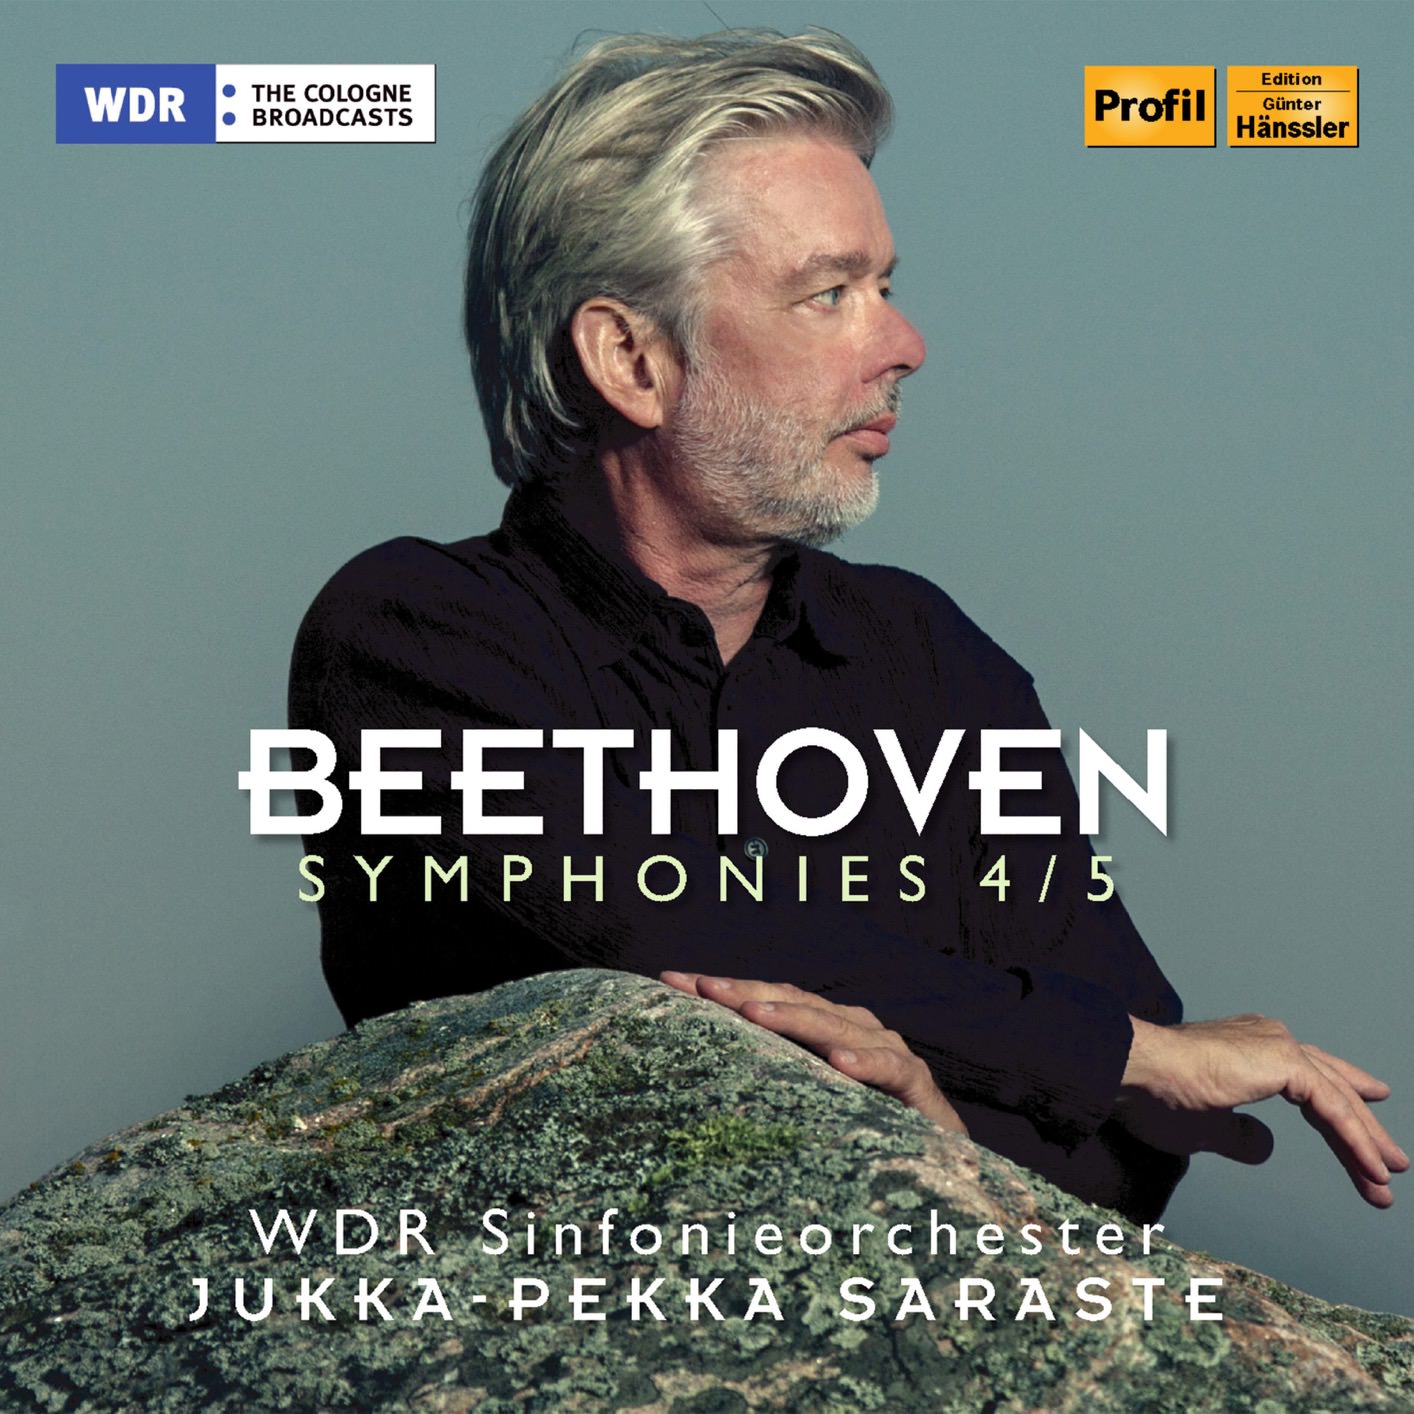 WDR Sinfonieorchester Koln & Jukka-Pekka Saraste - Beethoven: Symphonies Nos. 4 & 5 (2018) [FLAC 24bit/48kHz]